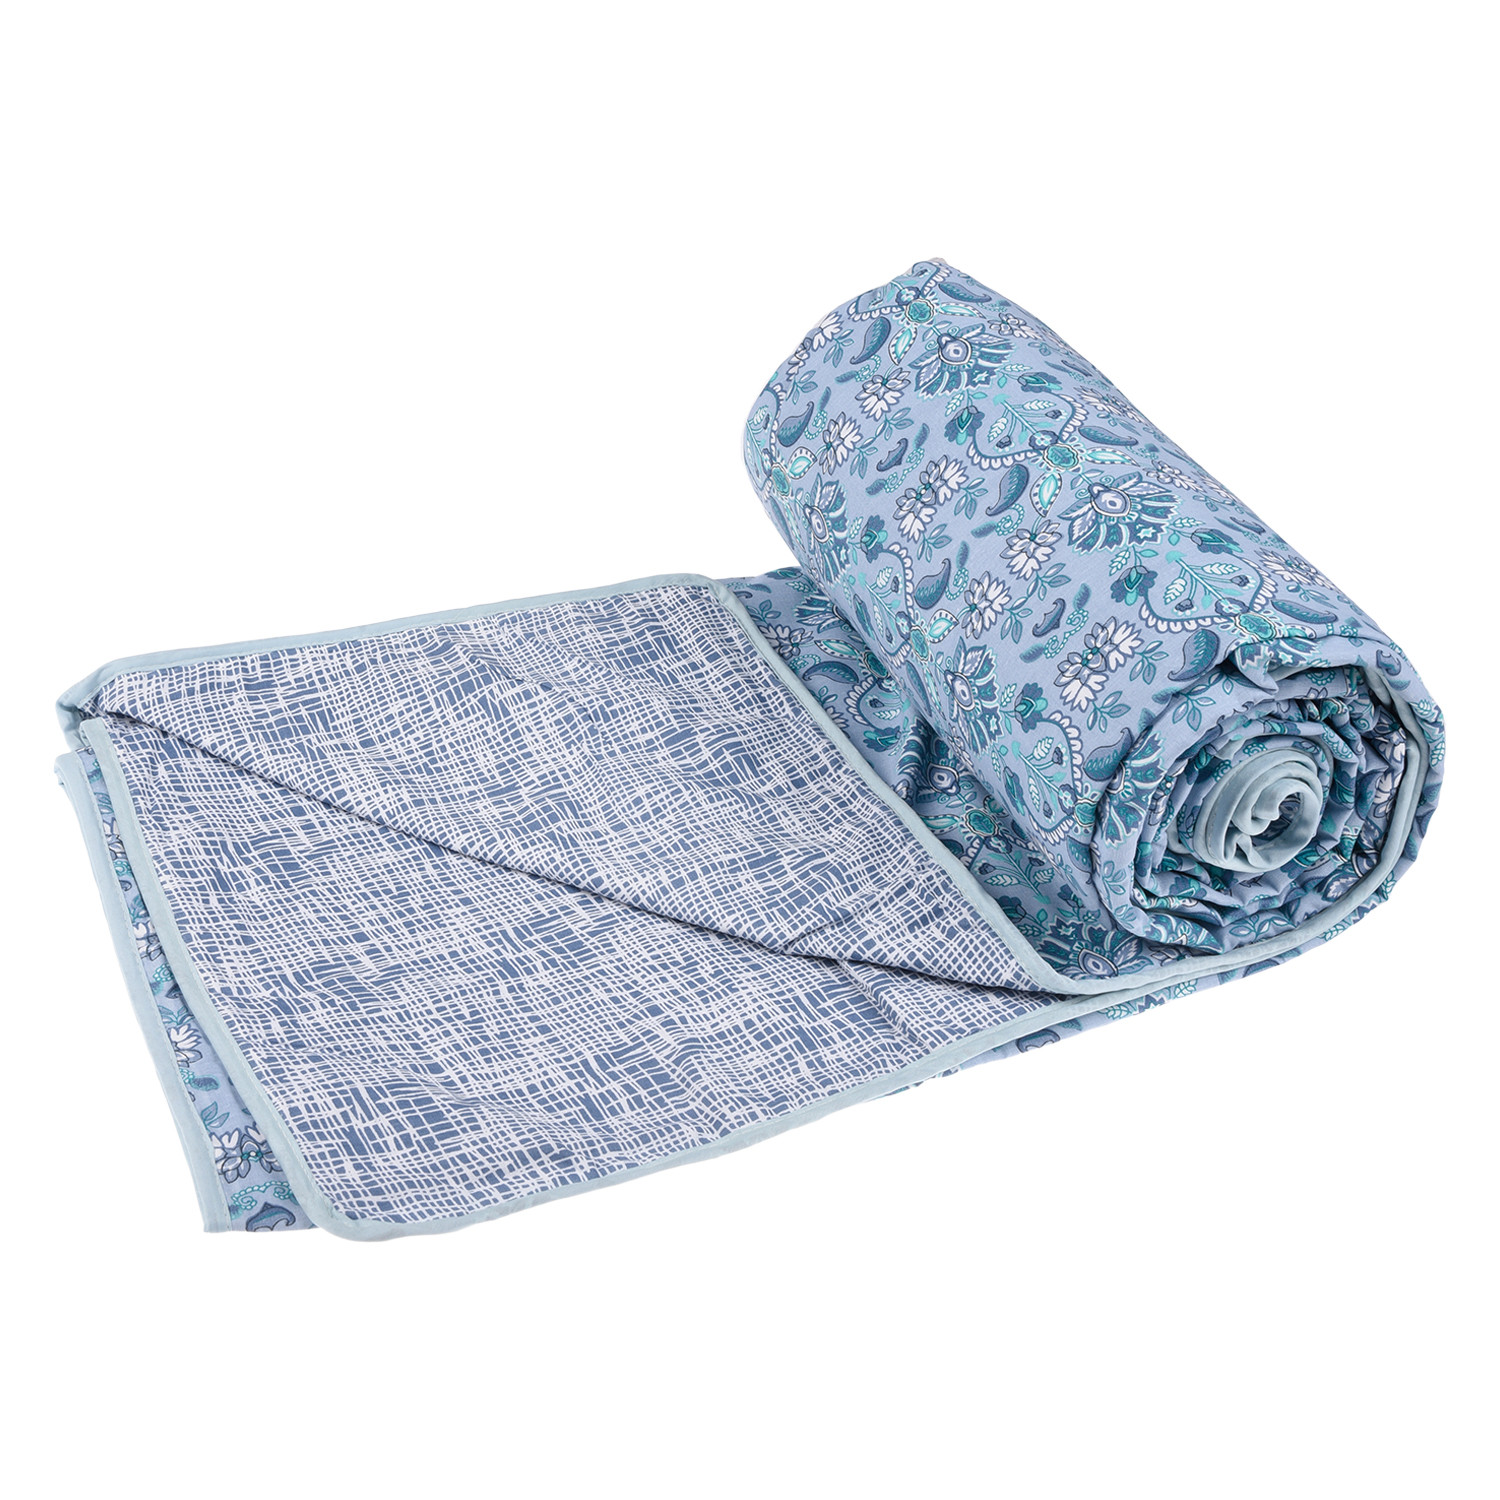 Kuber Industries Blanket | Cotton Single Bed Dohar | Blanket For Home | Reversible AC Blanket For Travelling | Blanket For Summer | Blanket For Winters | Carry Print | Blue